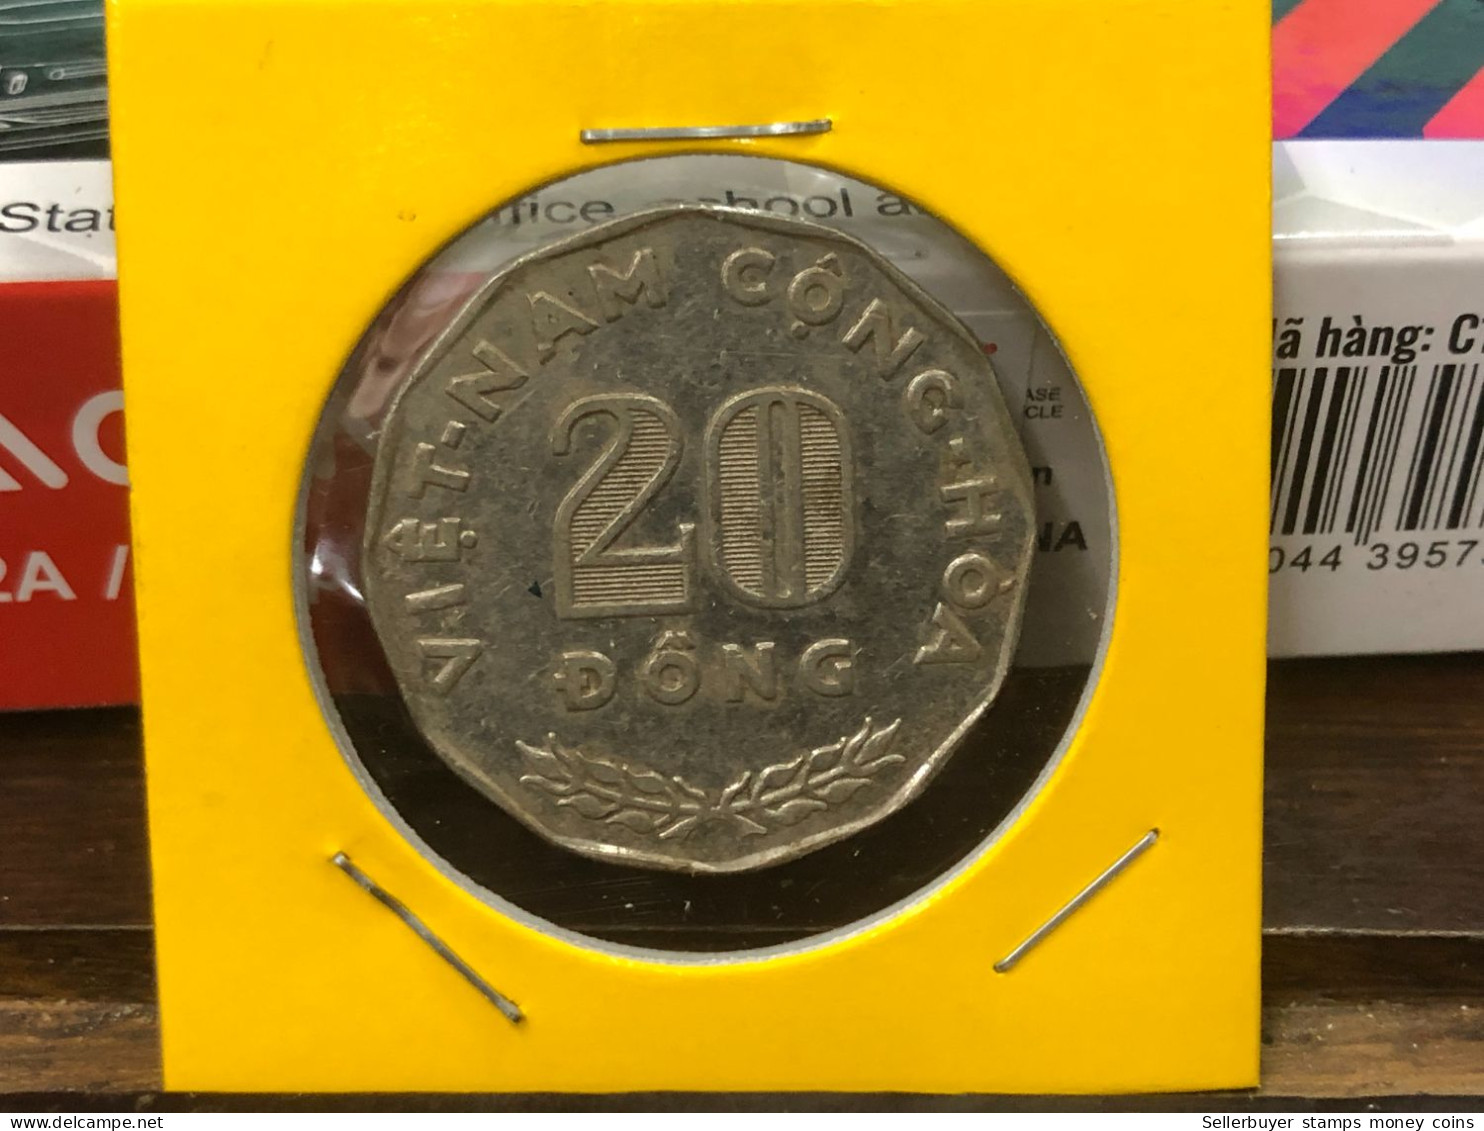 SOUTH VIET-NAM COINS 20 DONG 1968 KM#10-NICKEL CLAD STEEL -1 Pcs- Aunc No 2 - Viêt-Nam